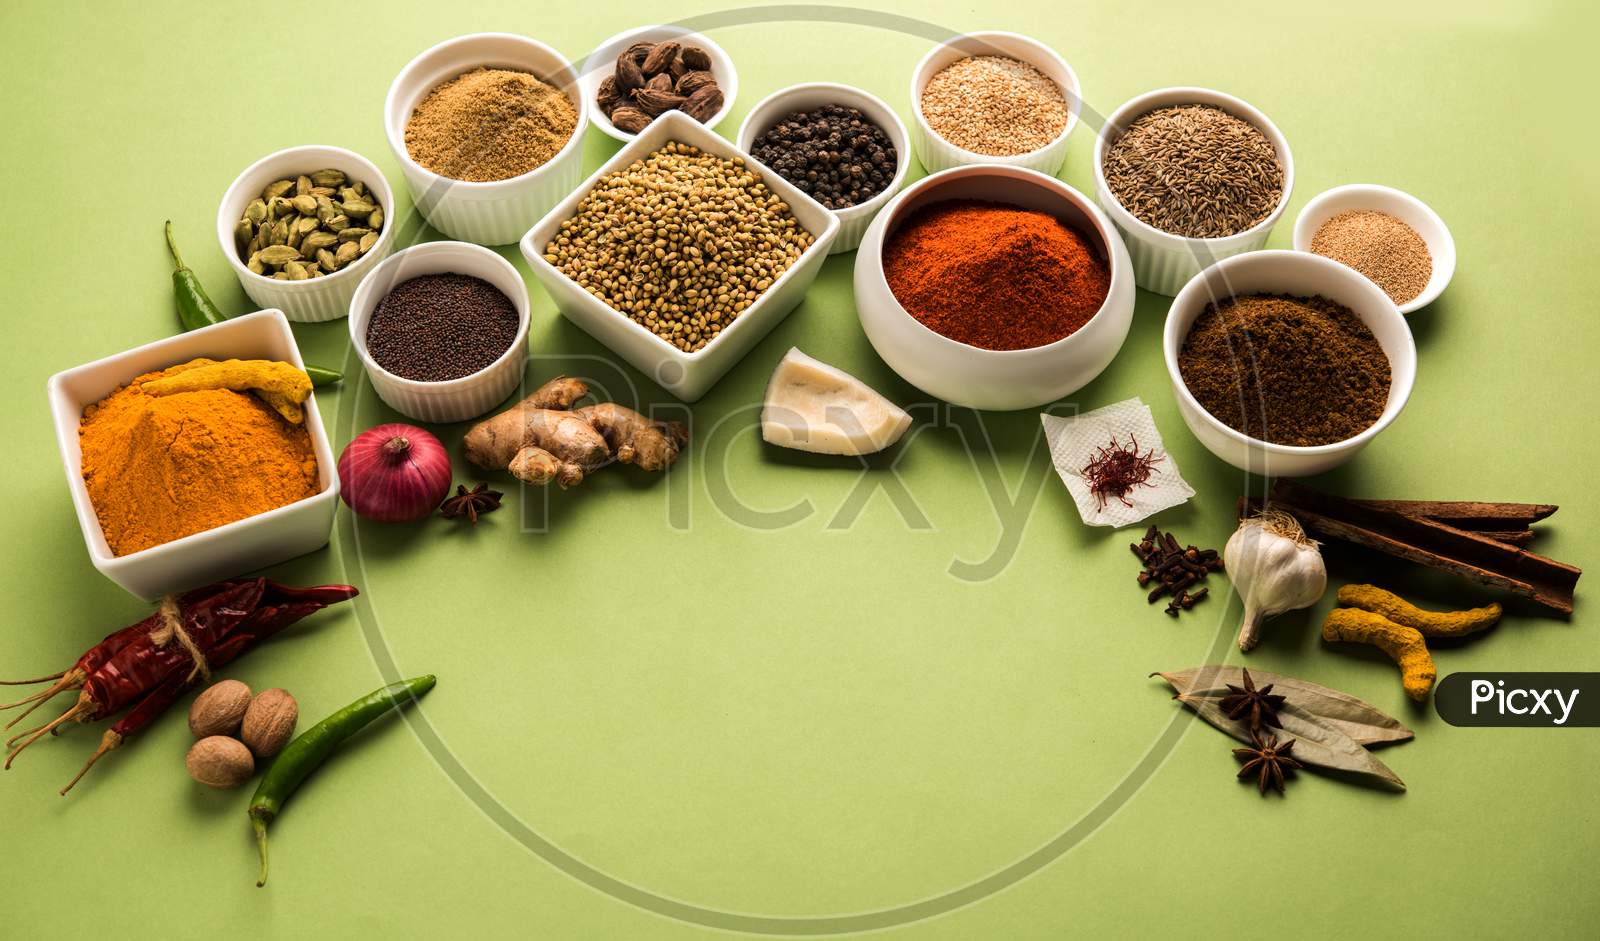 Raw Indian Spices or masala Powder